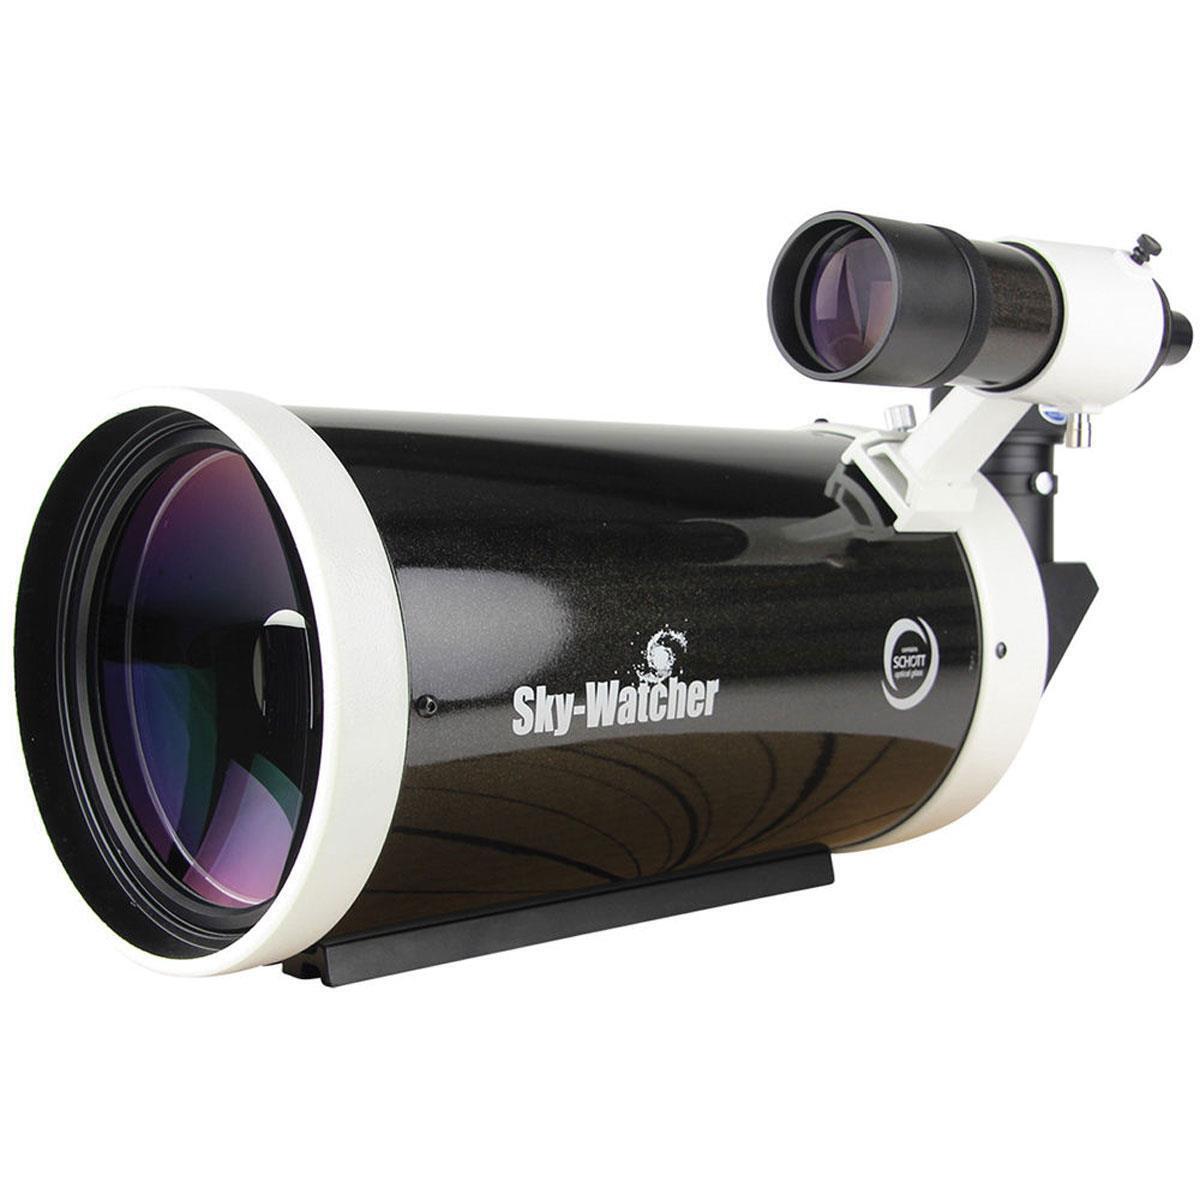 Sky-Watcher Skymax 150, Maksutov-Cassegrain 150mm Telescope #S11530